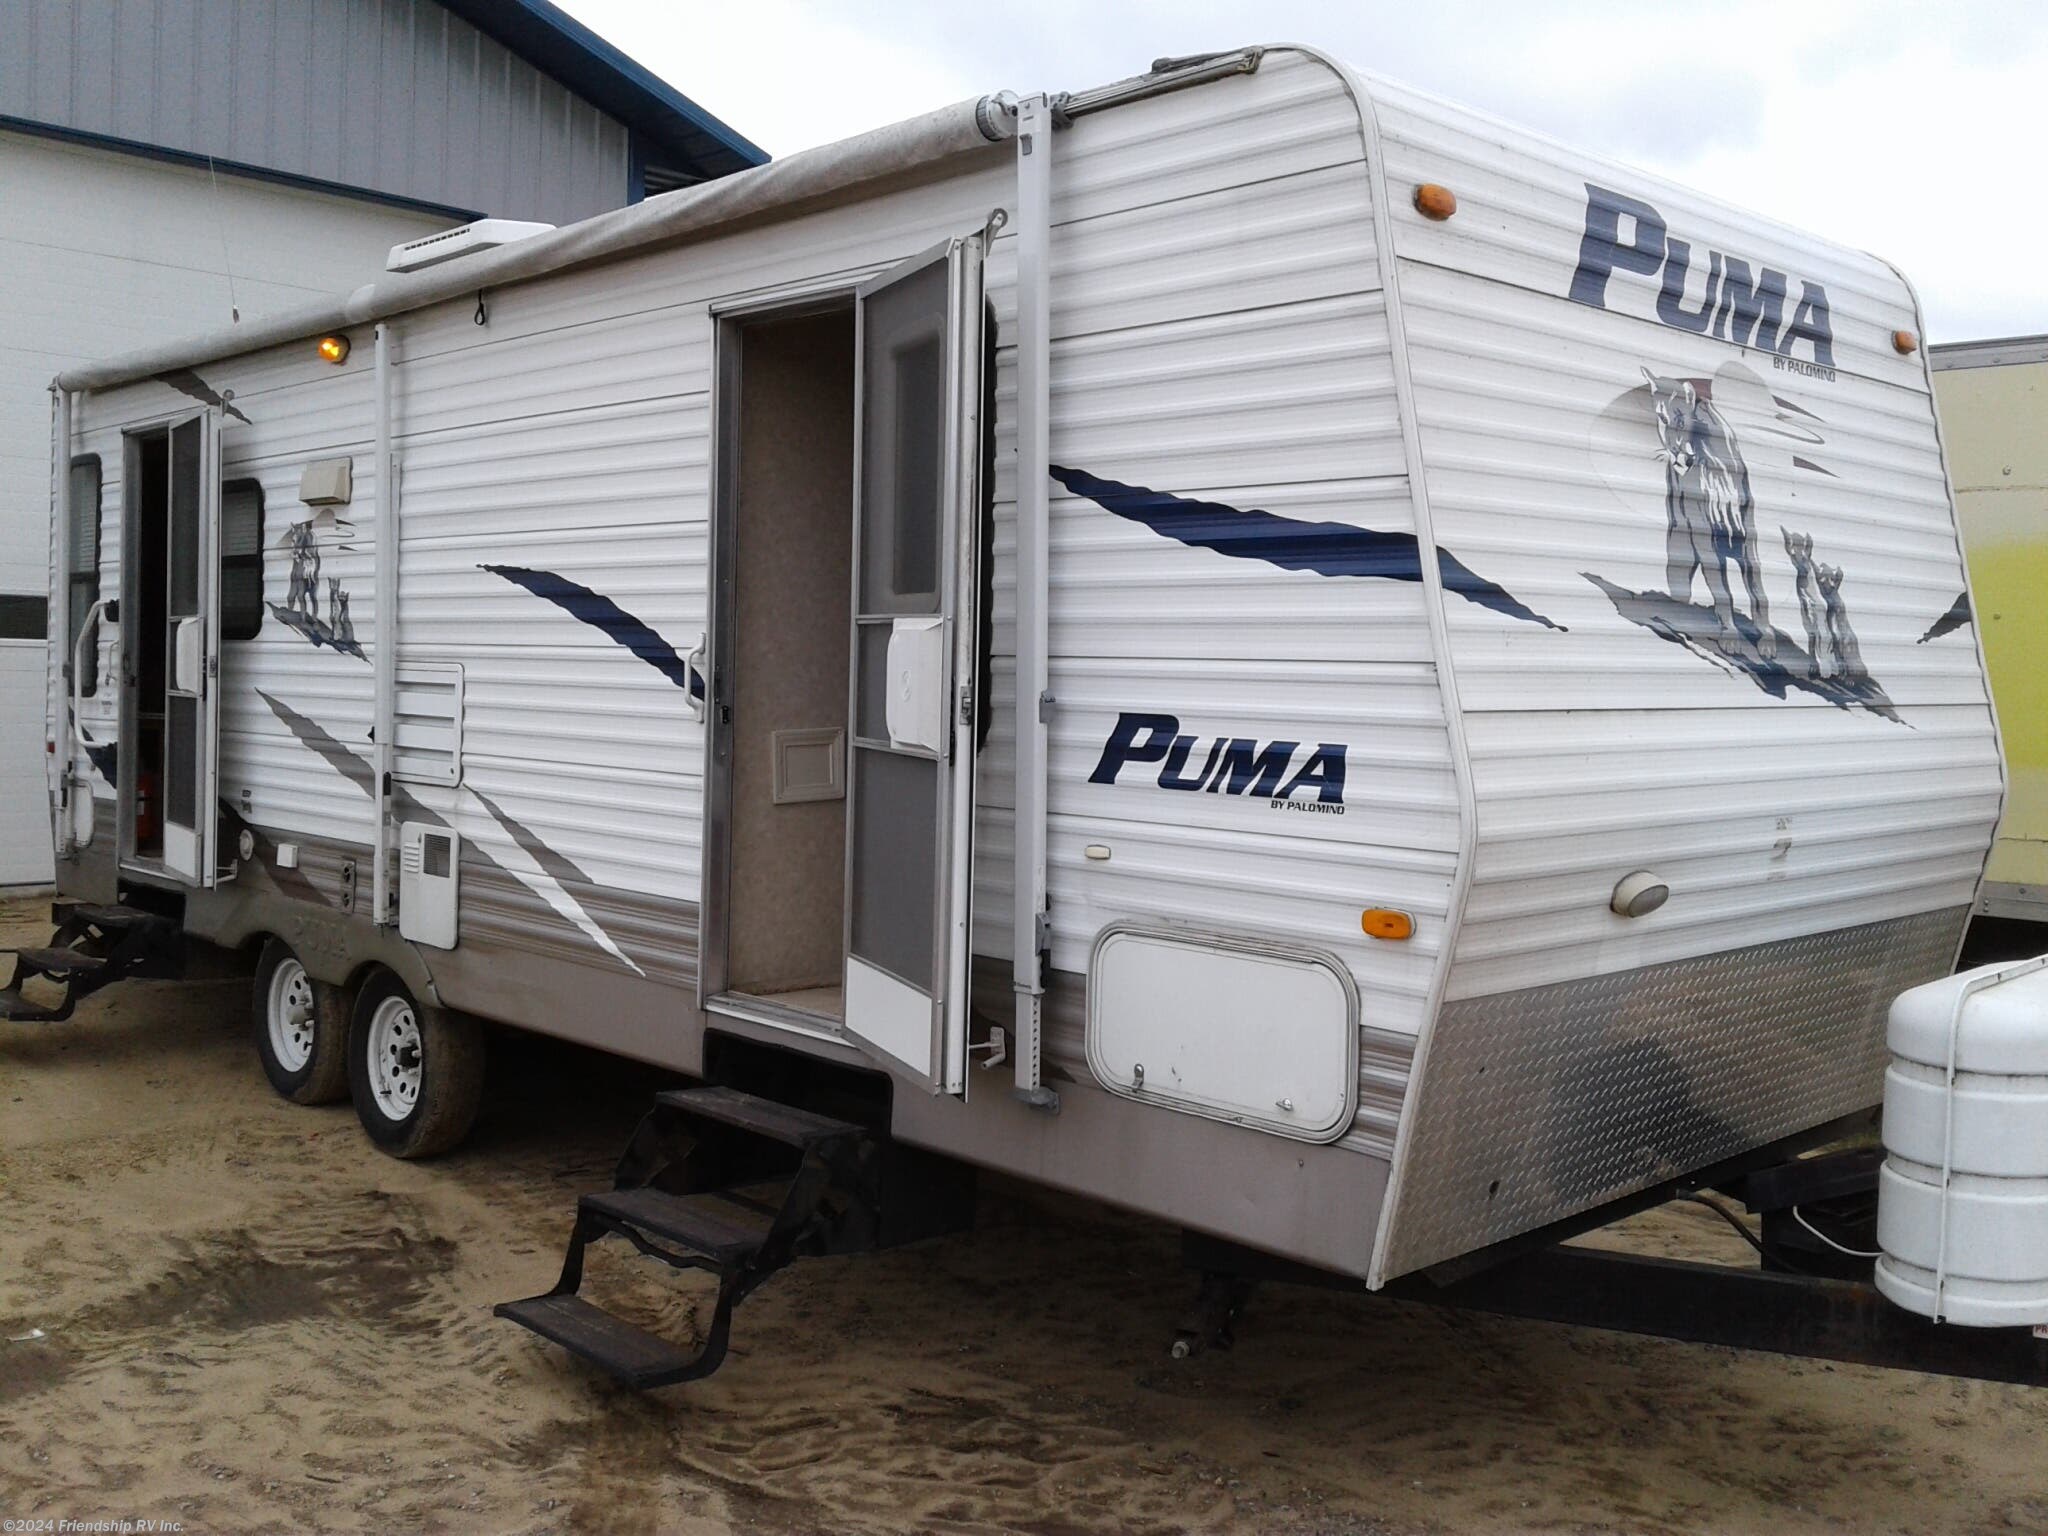 2007 puma travel trailer for sale